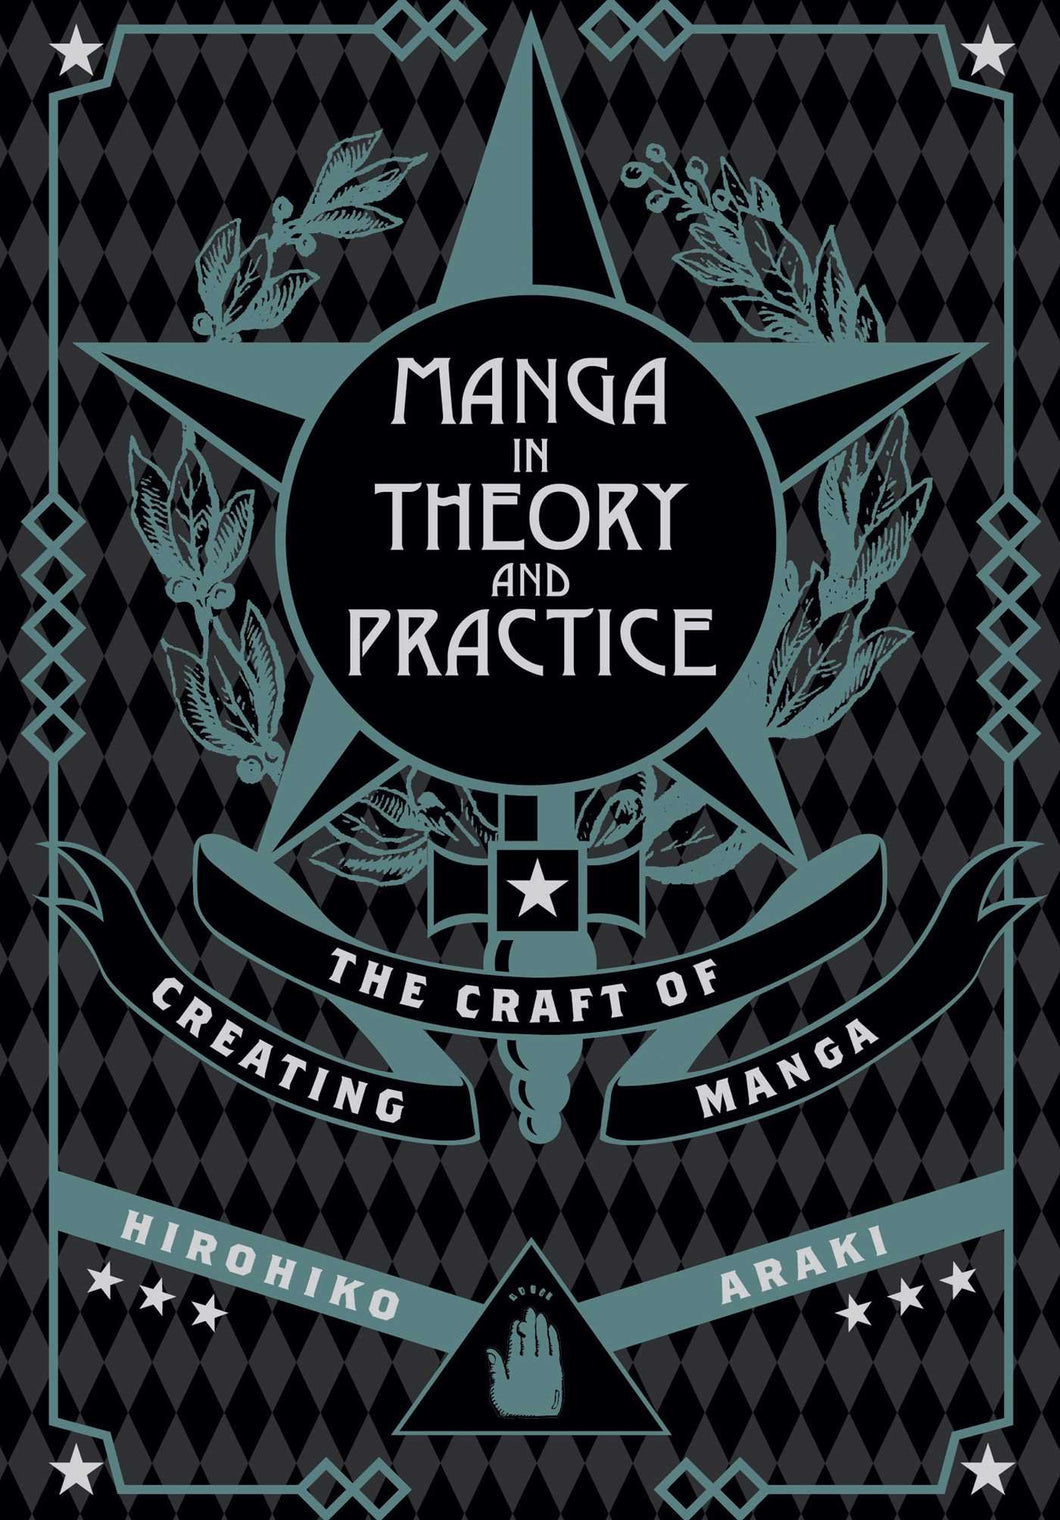 Manga in Theory and Practice: The Craft of Creating Manga by Hirohiko Araki